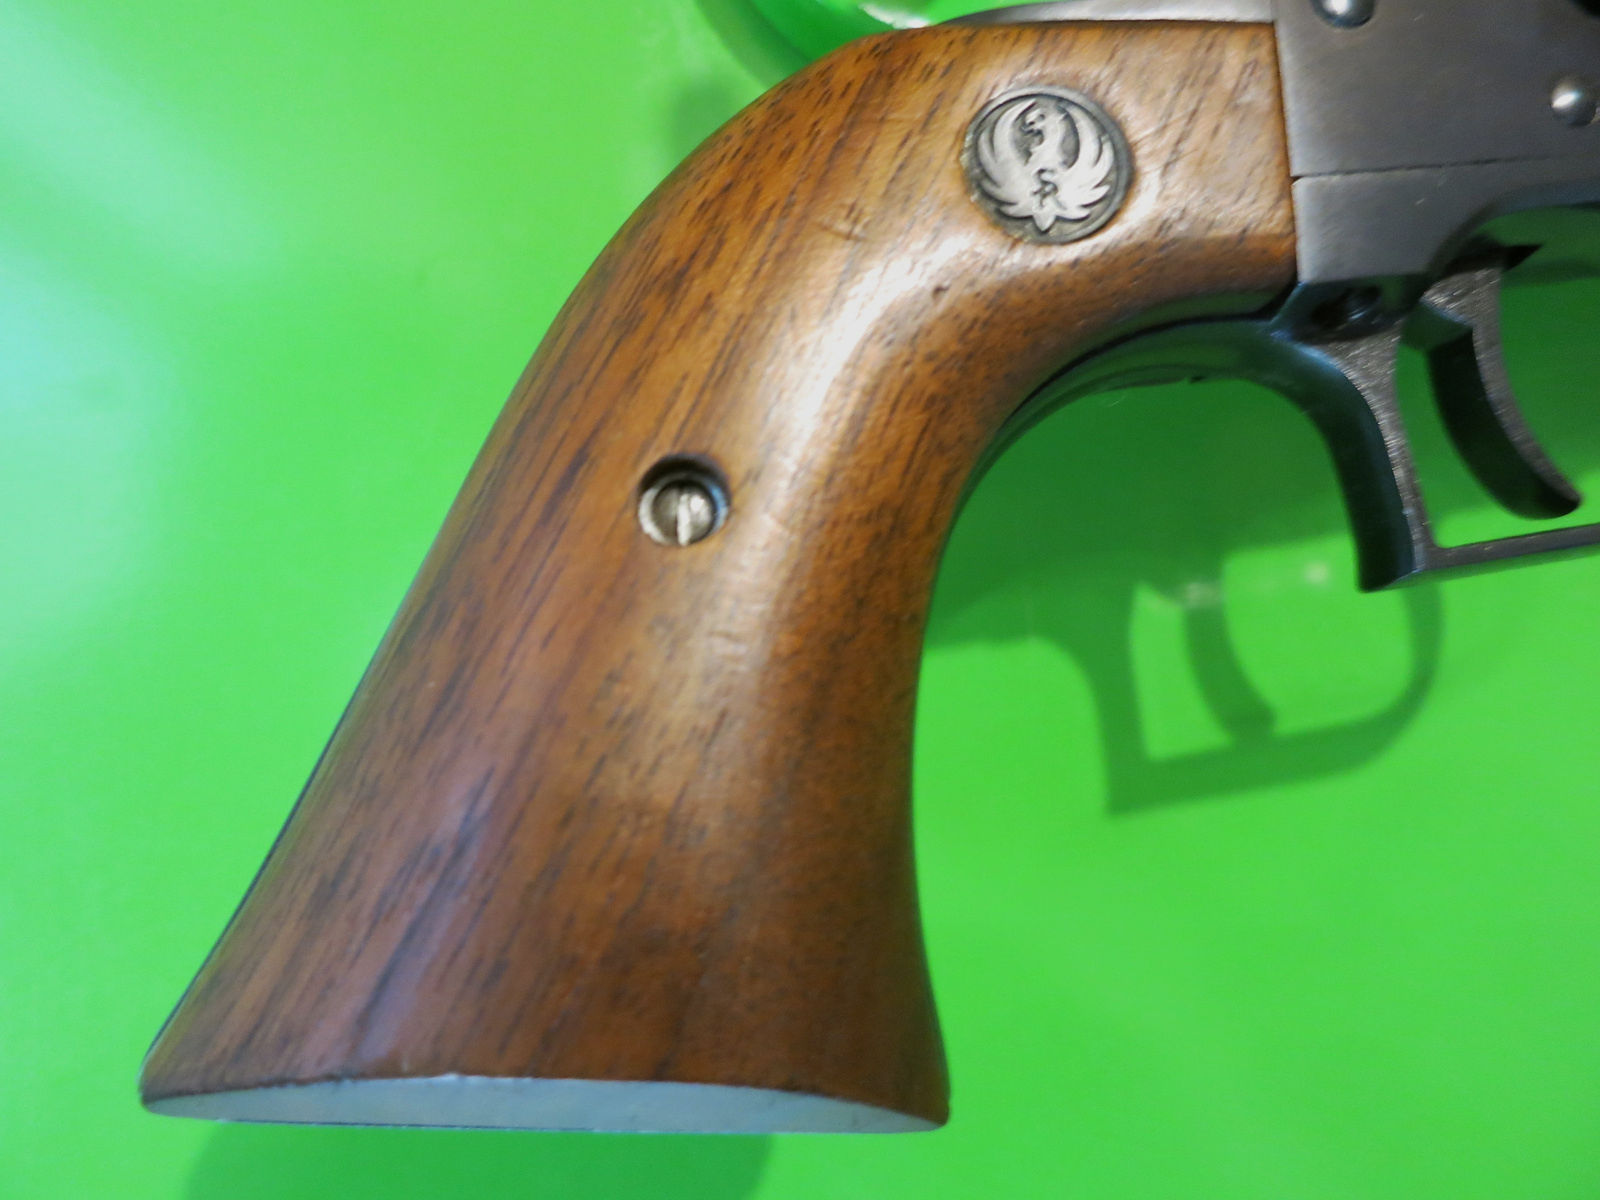 Western-Revolver, Sturm, Ruger & Co. New Modell Super Blackhawk, 10,5" Lauf, . 44 Magnum     #67